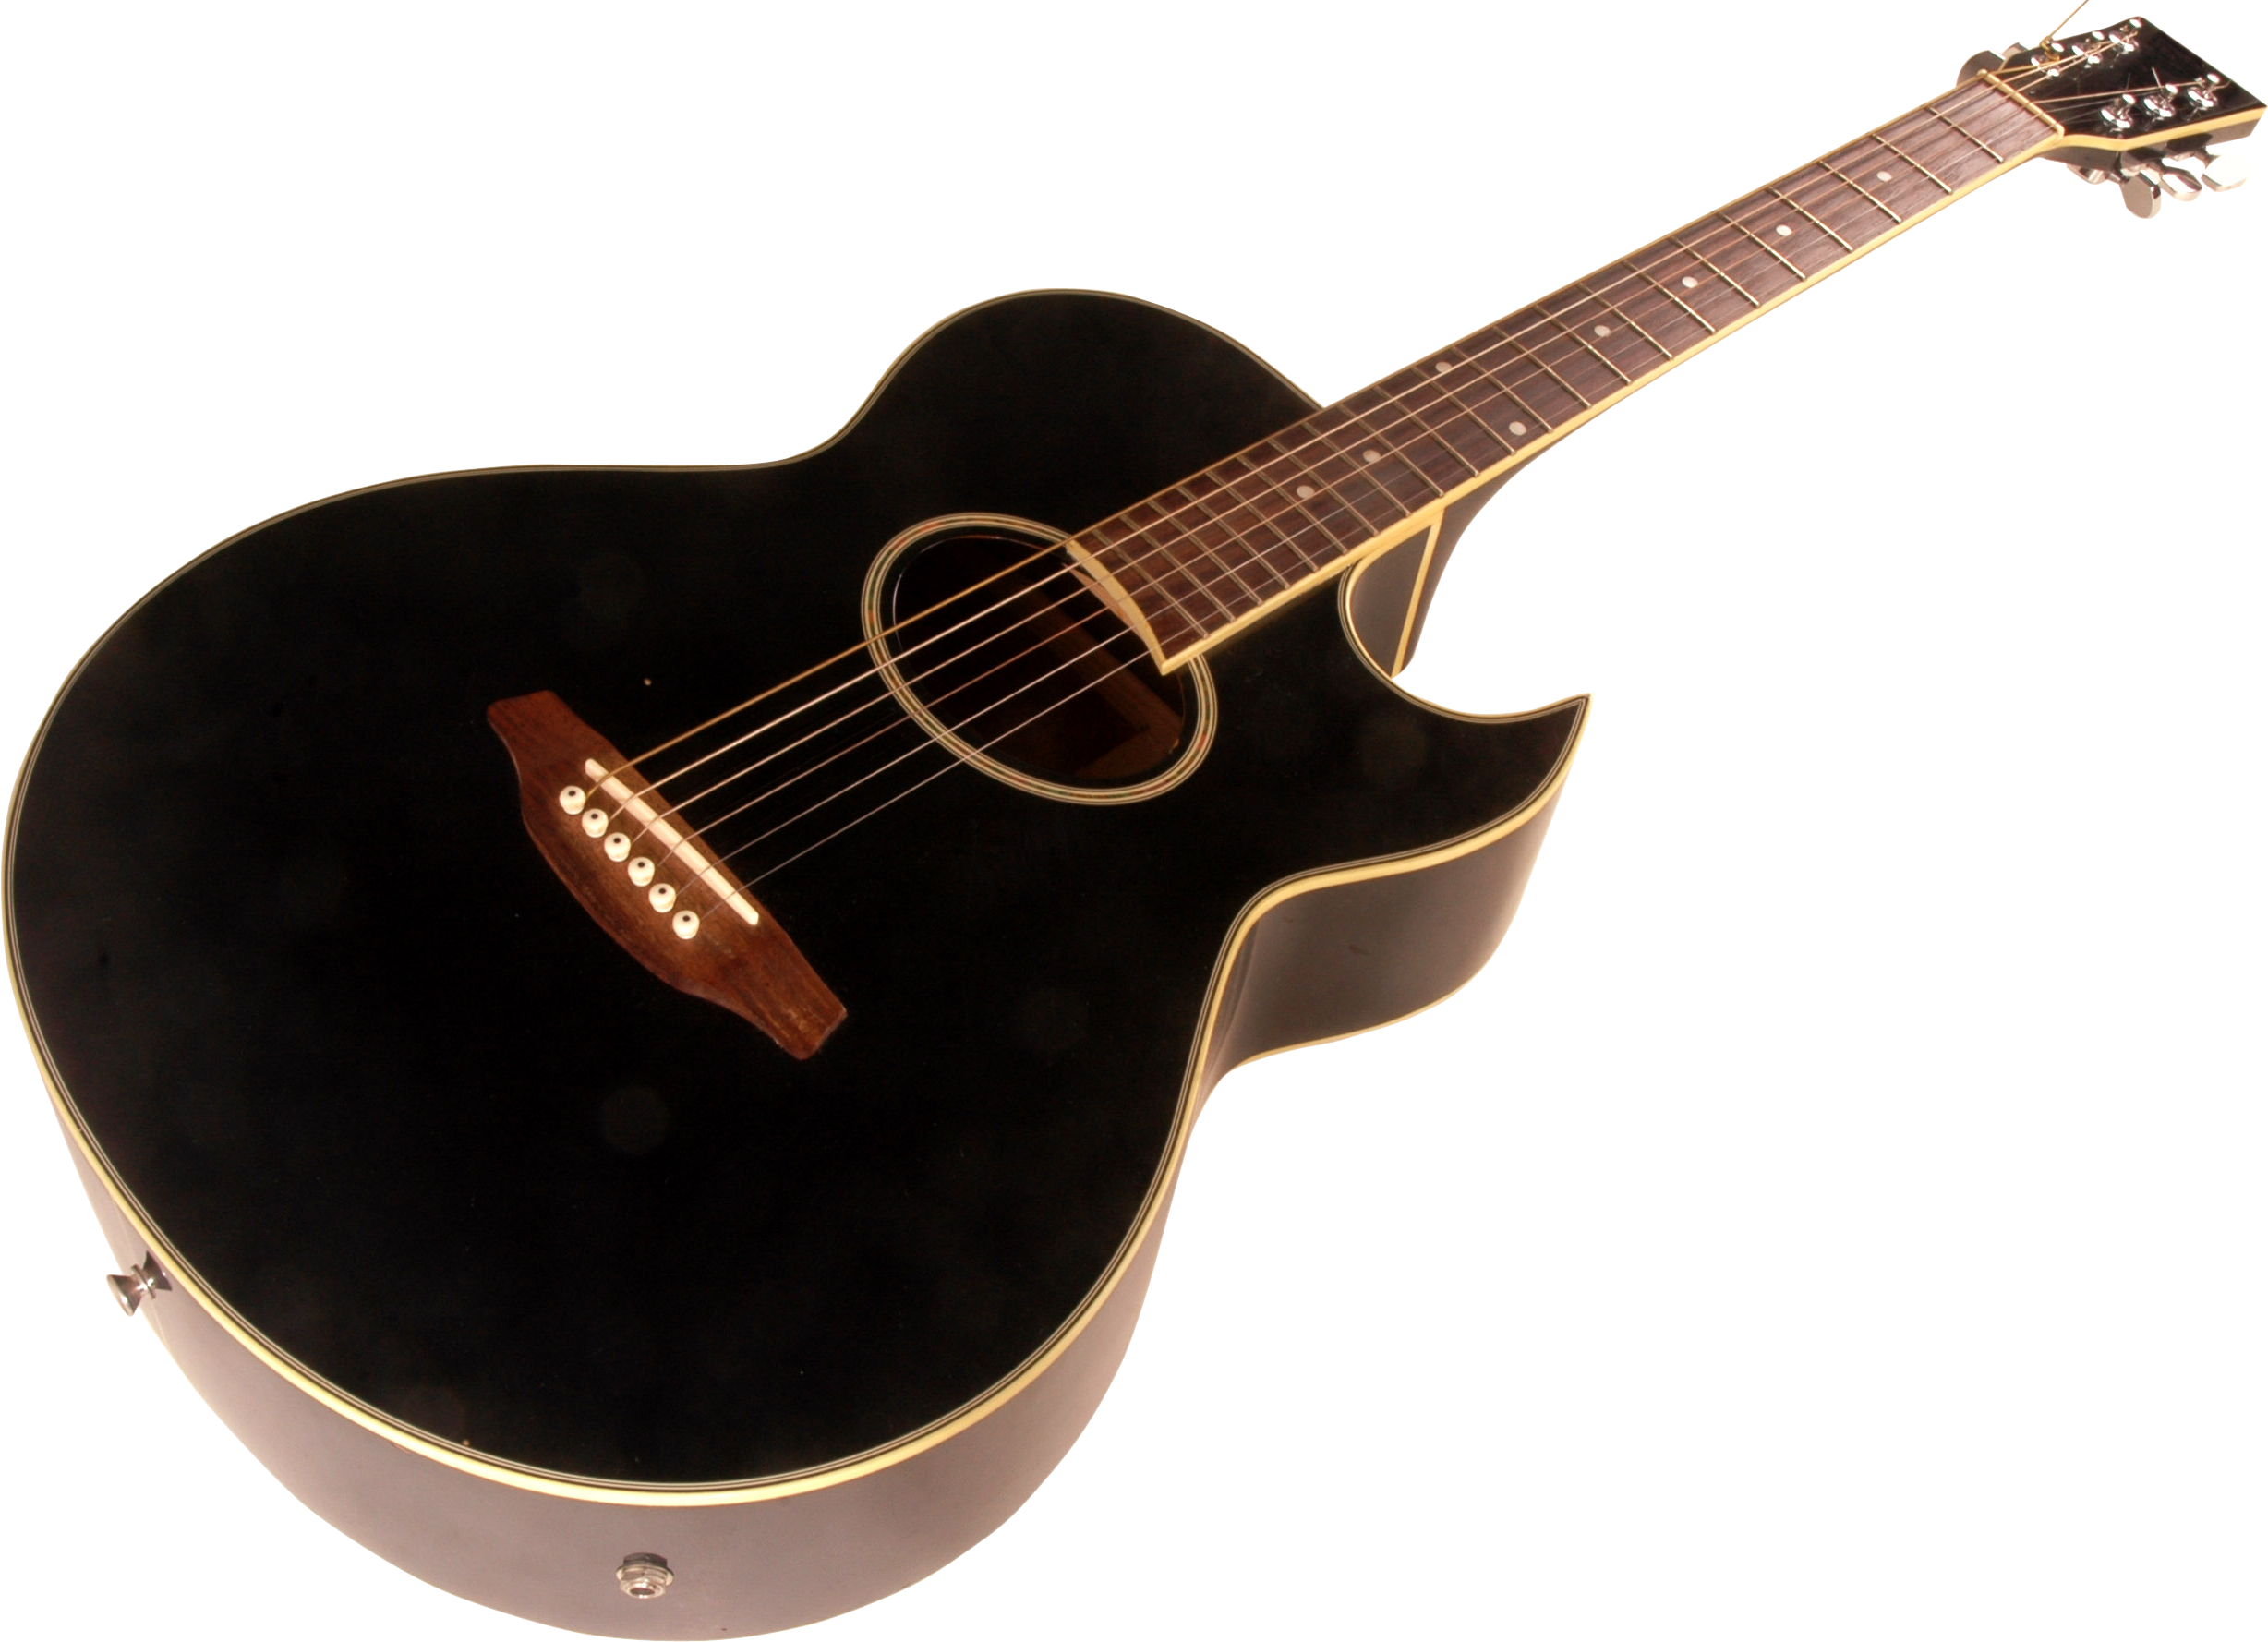 Acoustic Guitar Png Image Purepng Free Transparent Cc0 Png Image